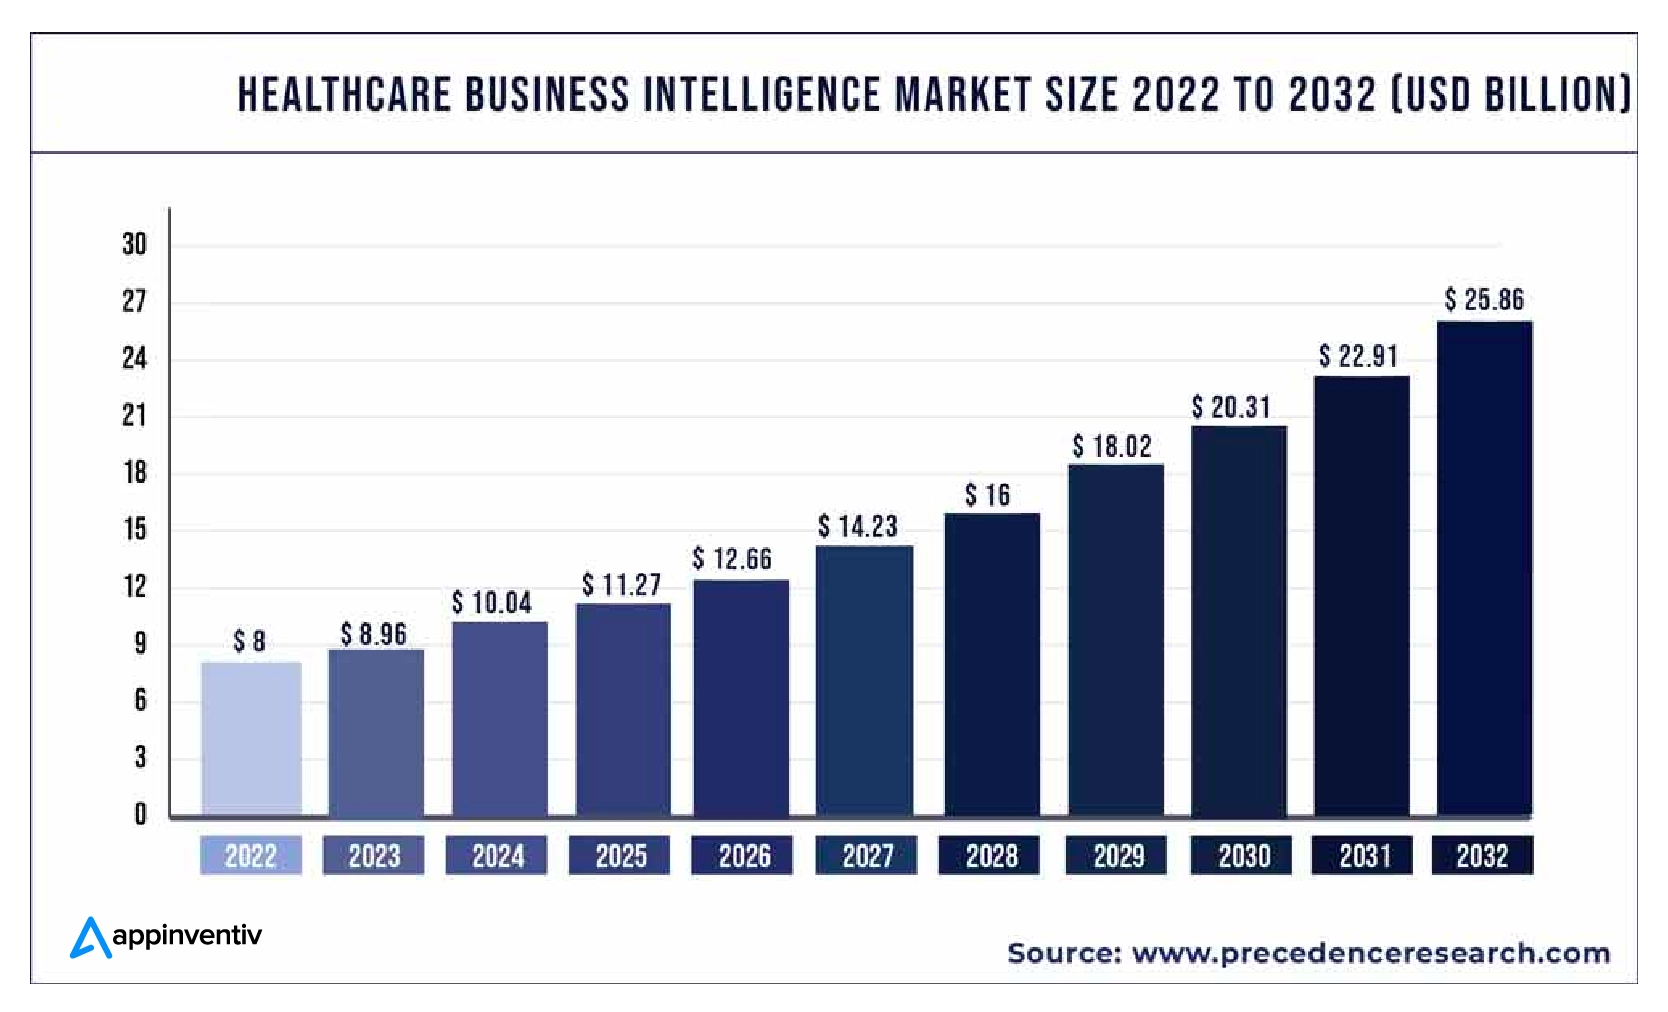 Healthcare business intelligence market size